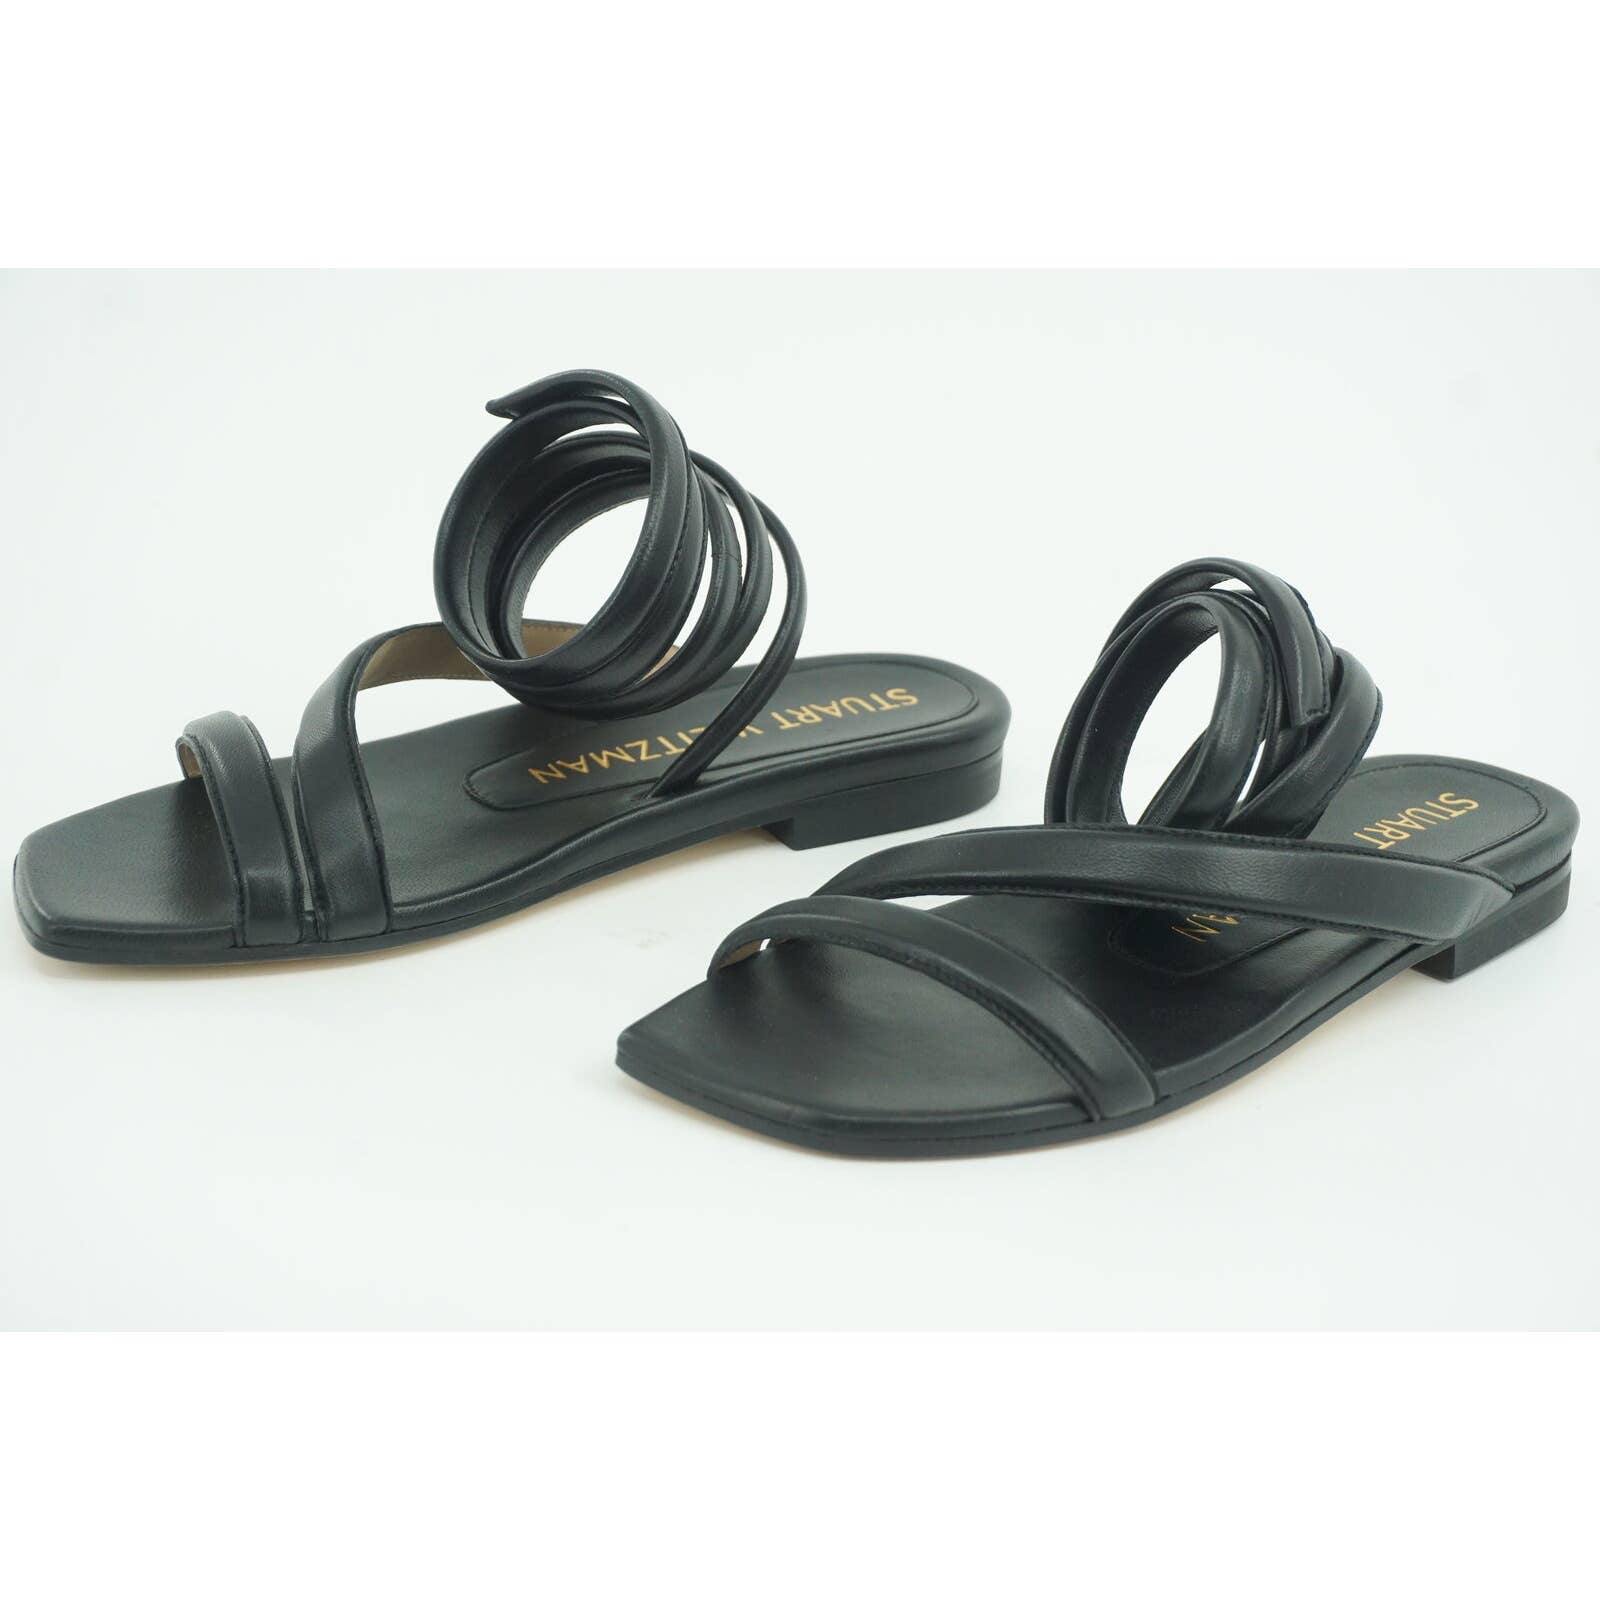 Stuart Weitzman Beatrix Black Leather Ankle Flat Wrap Sandals Size 5.5 NIB